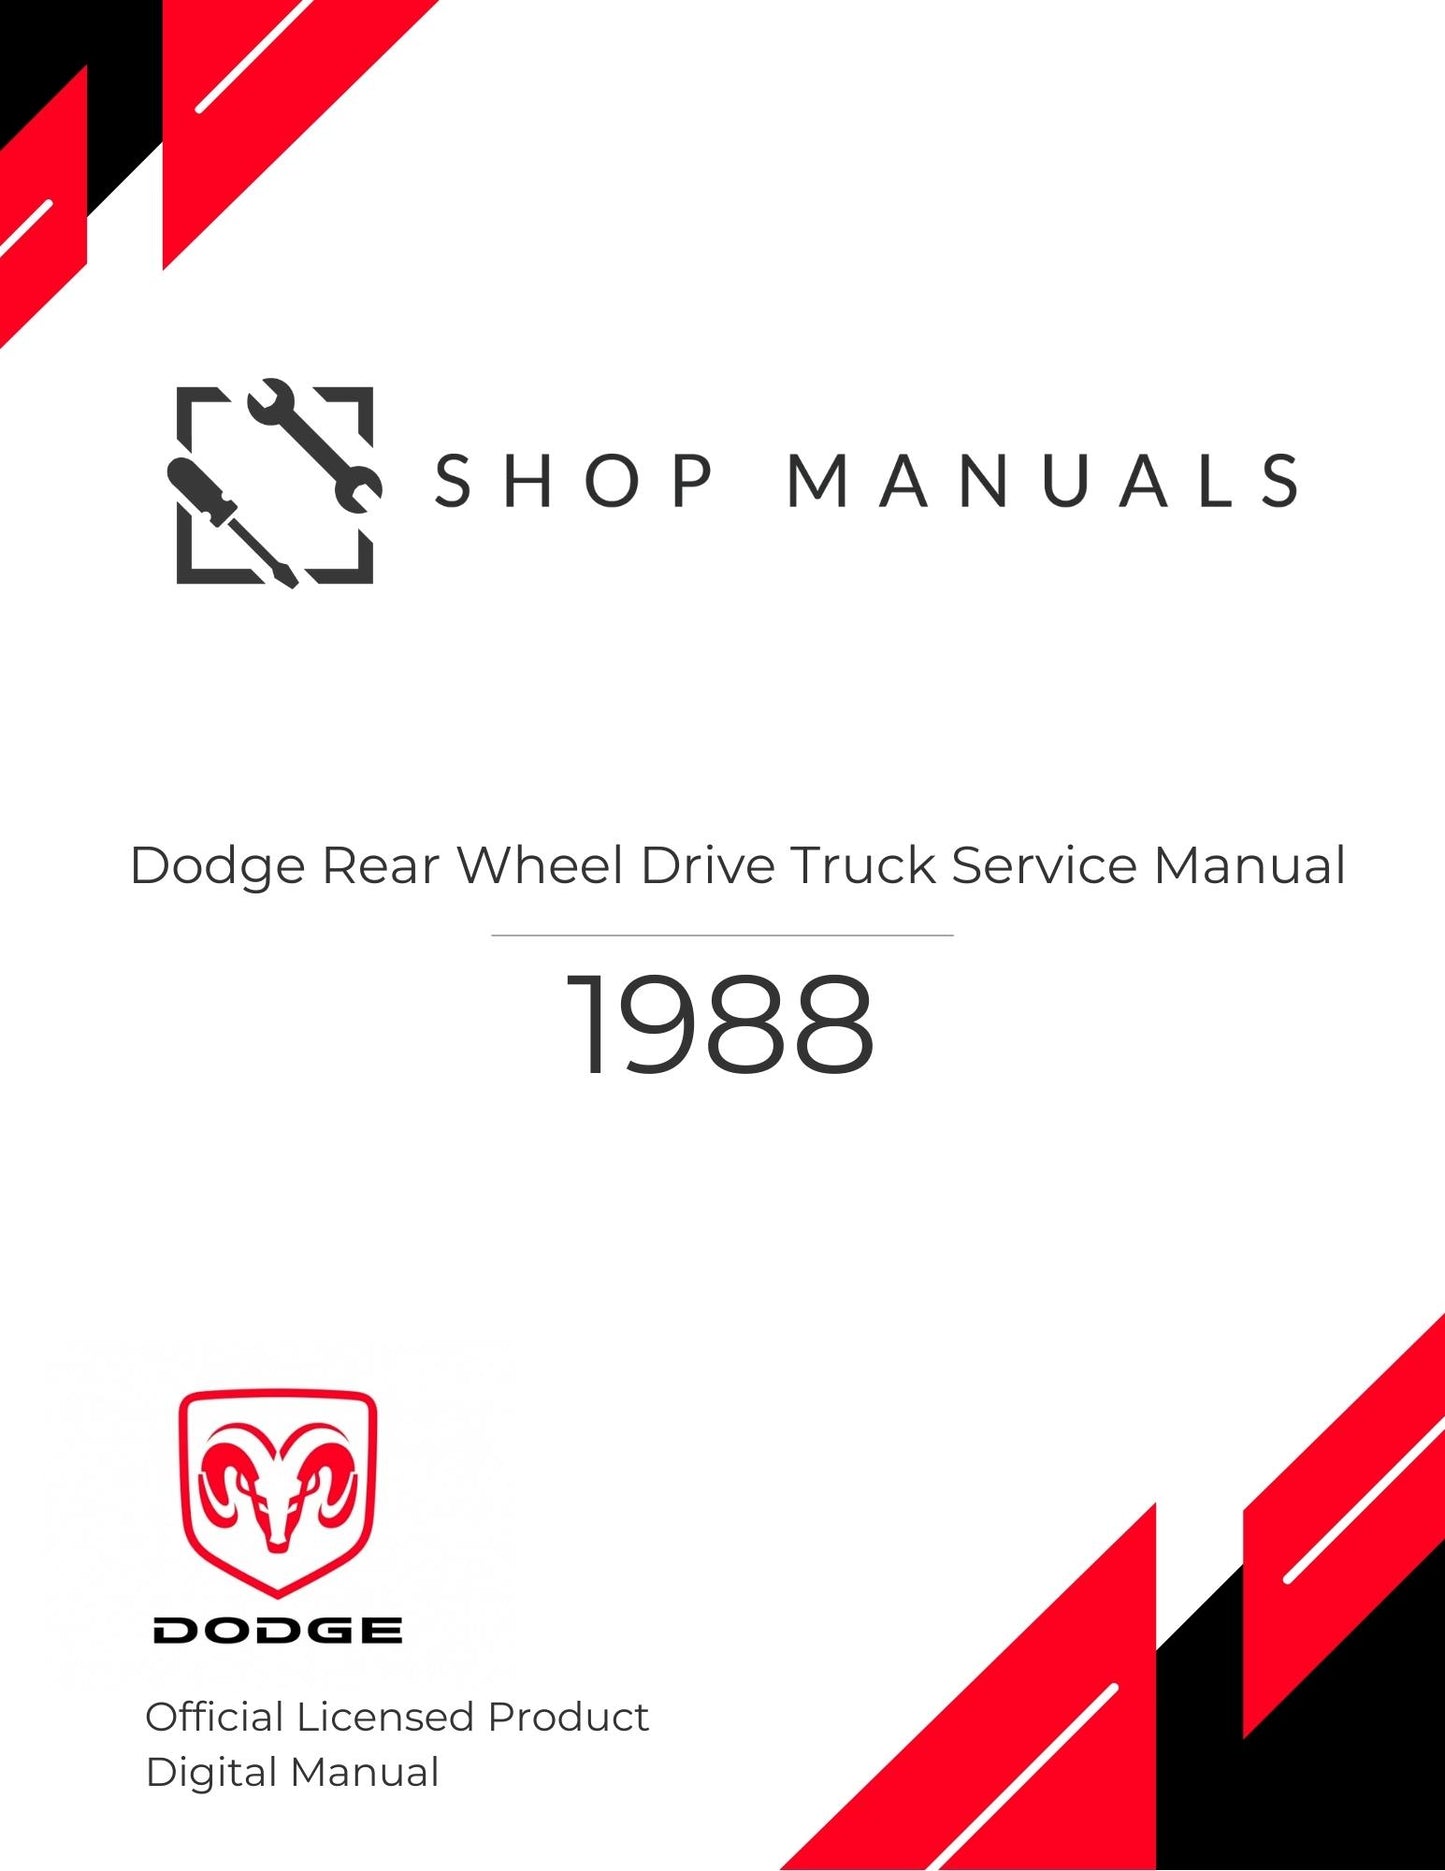 1988 Dodge Rear Wheel Drive Truck Service Manual